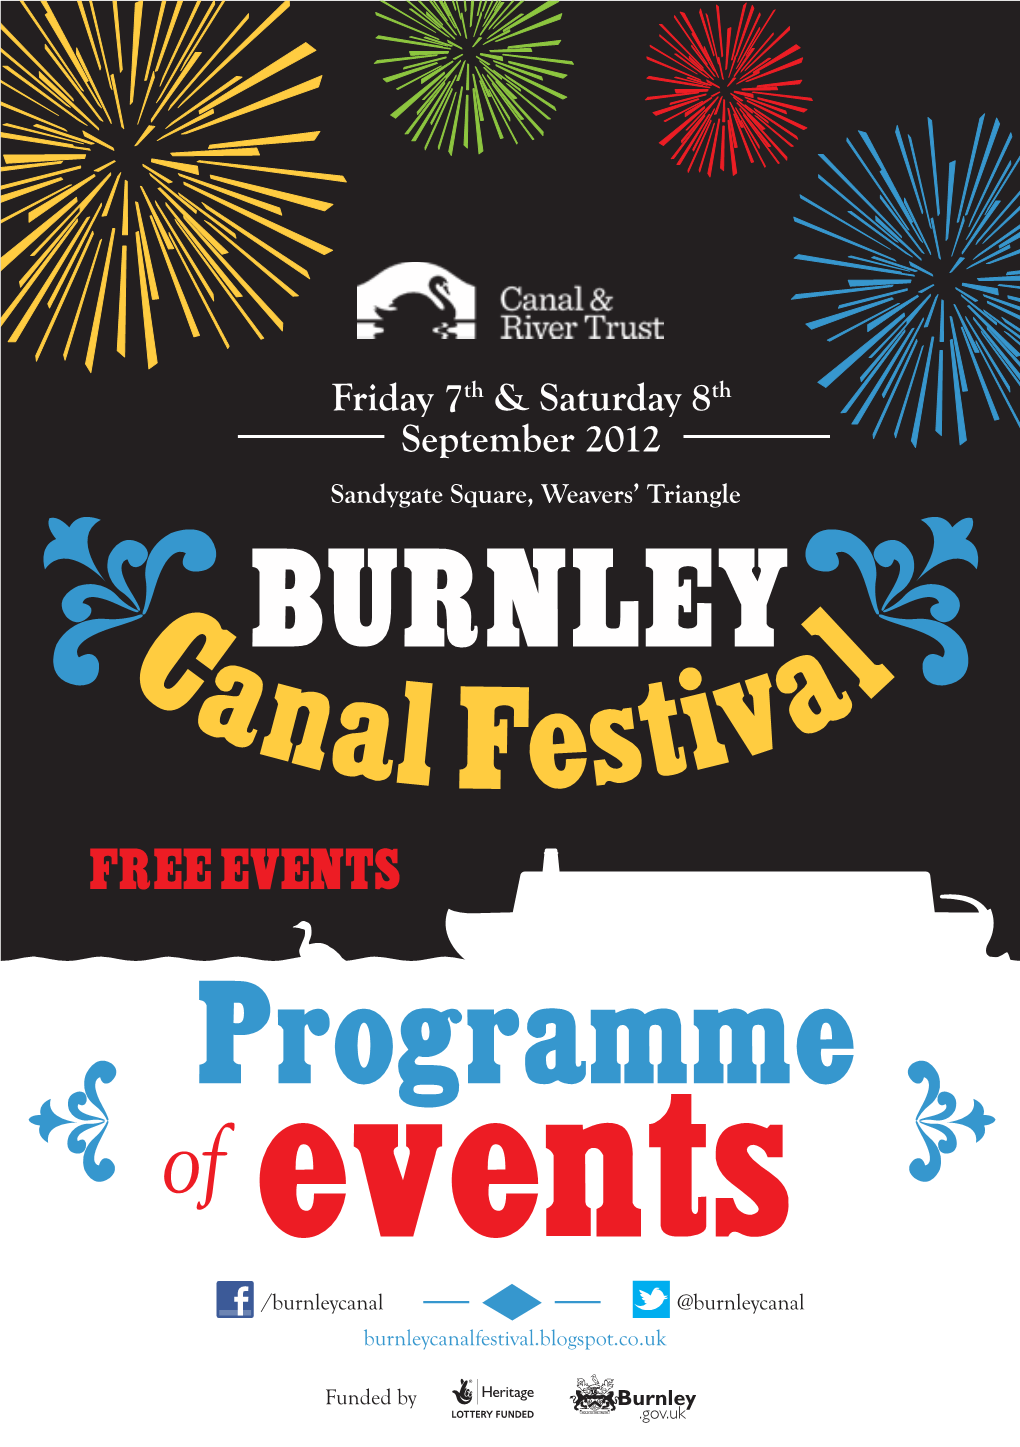 Programme of Events /Burnleycanal @Burnleycanal Burnleycanalfestival.Blogspot.Co.Uk